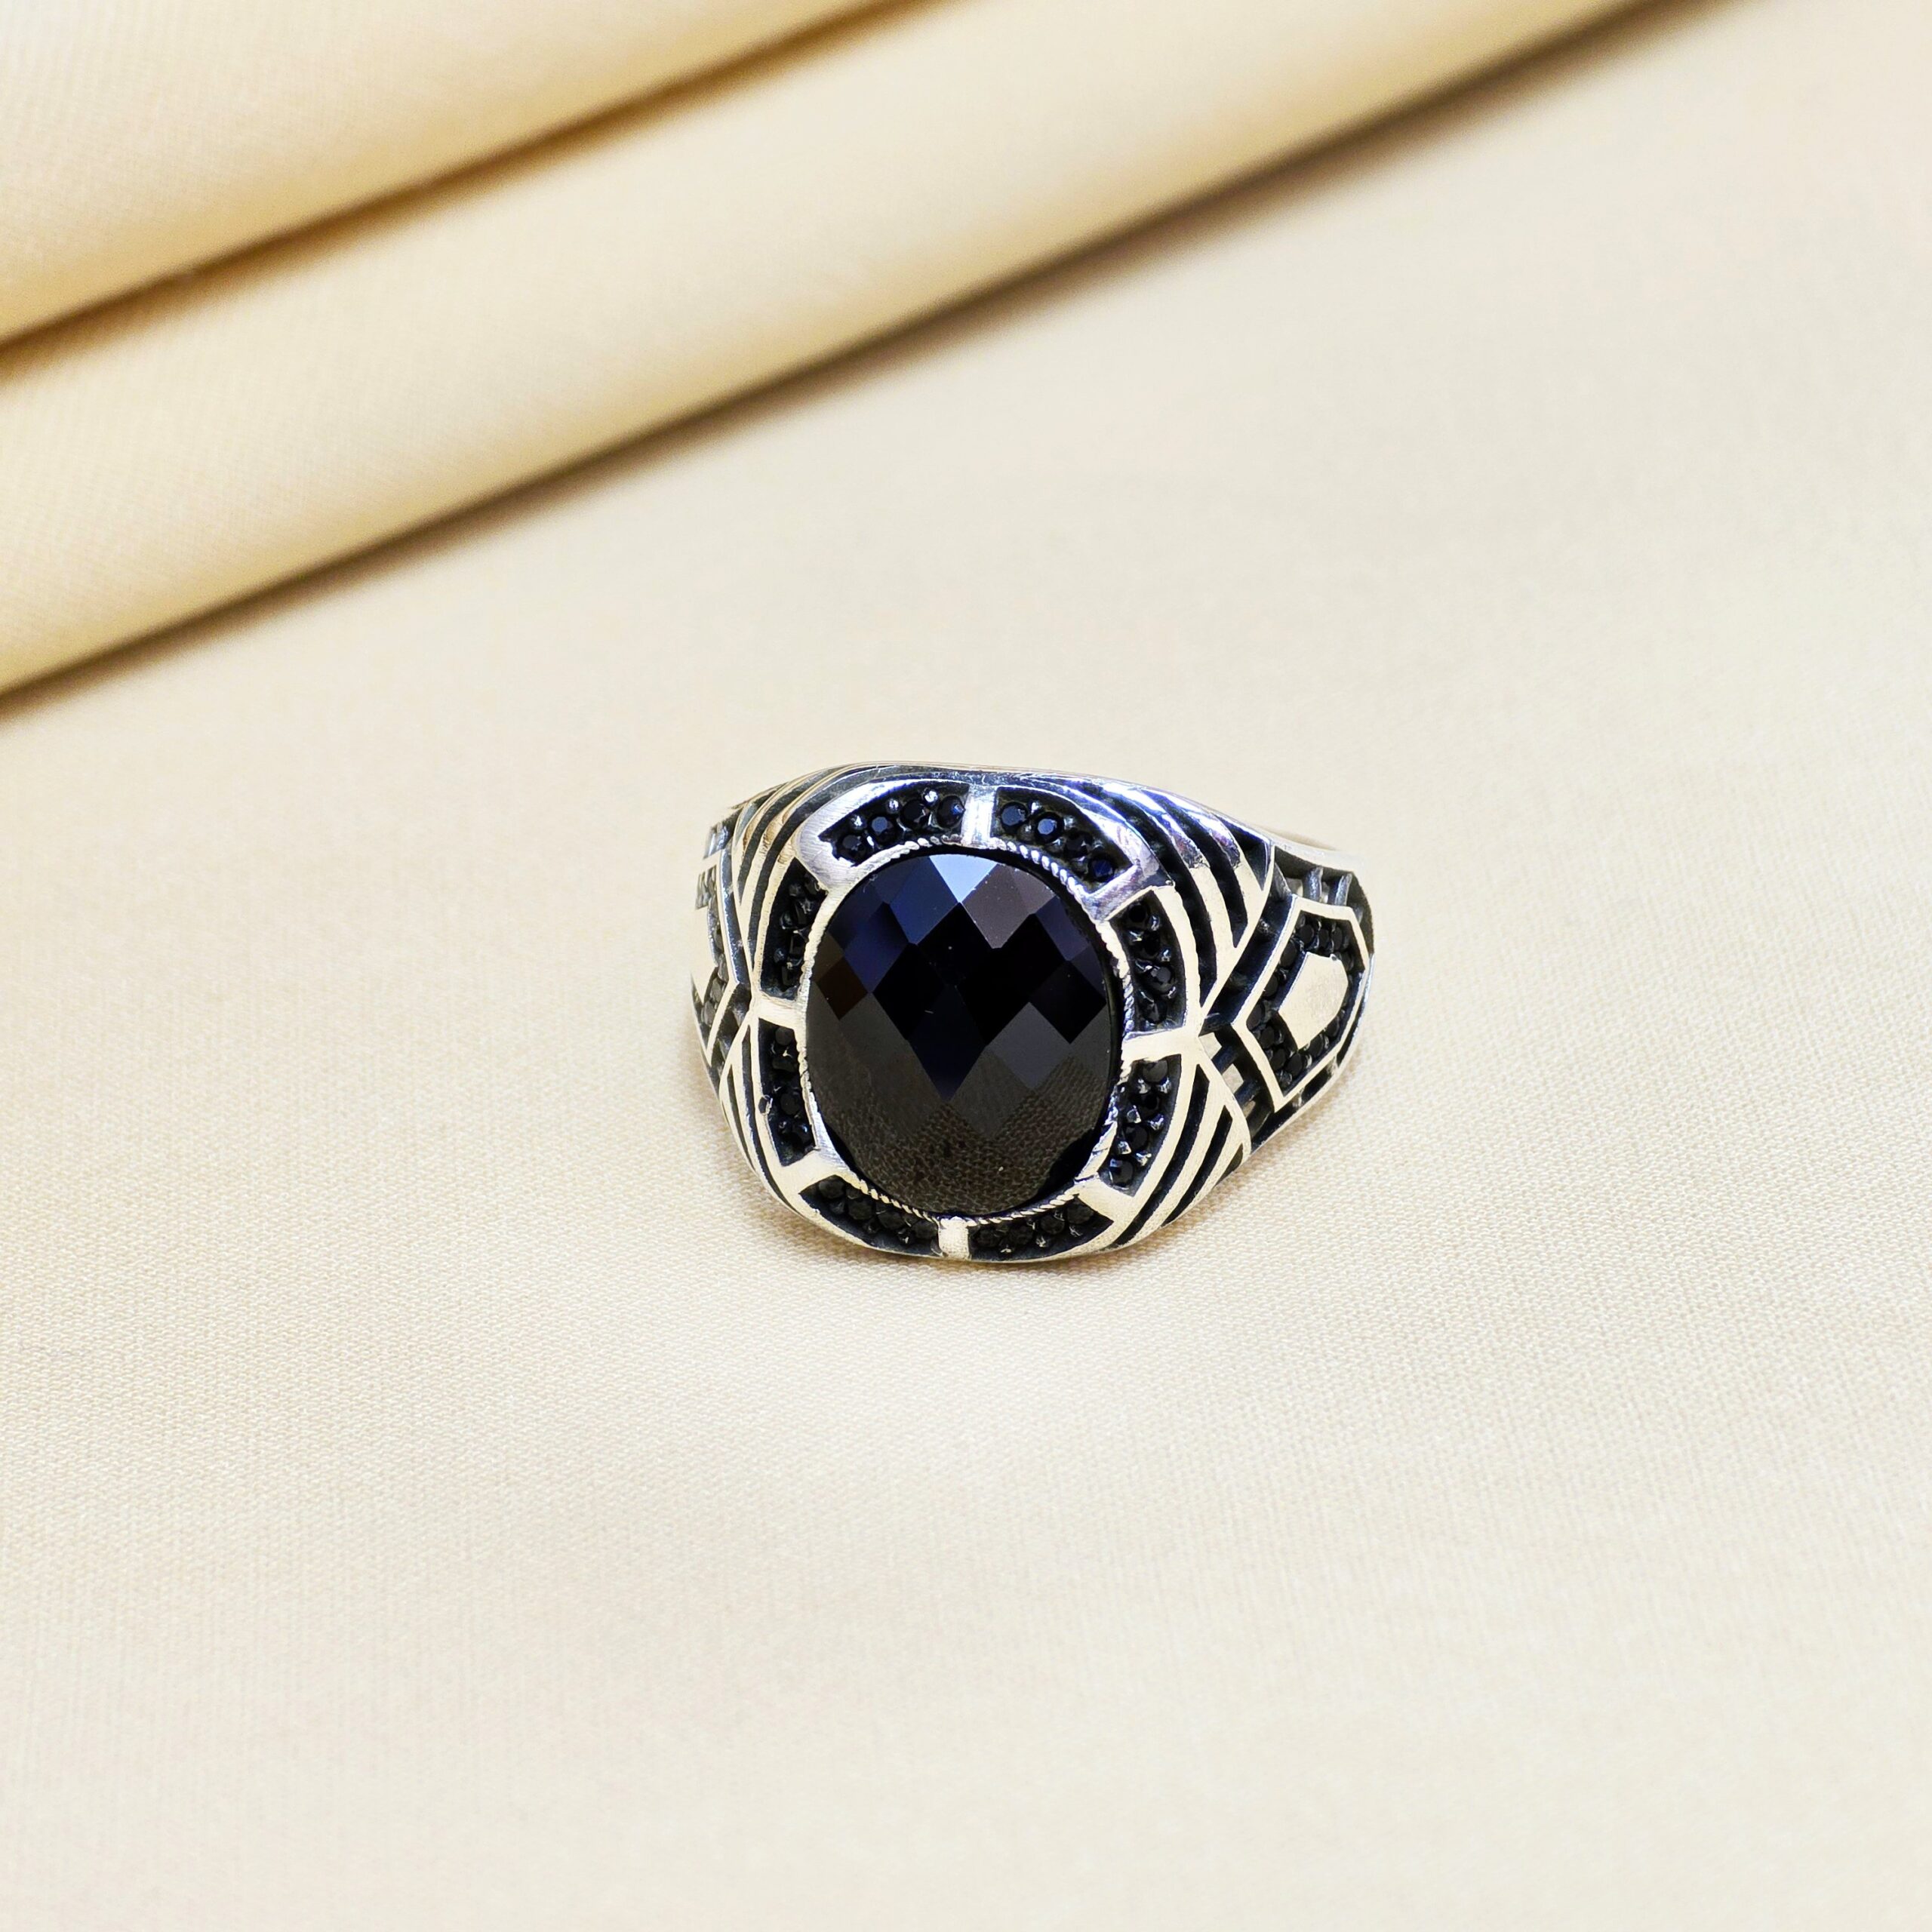 Mens Handmade Ring, Turkish Handmade Silver Men Ring, Ottoman Mens Ring, Onyx Stone Ring, Men Ring, Gift for Him, 925 Sterling Silver Ring